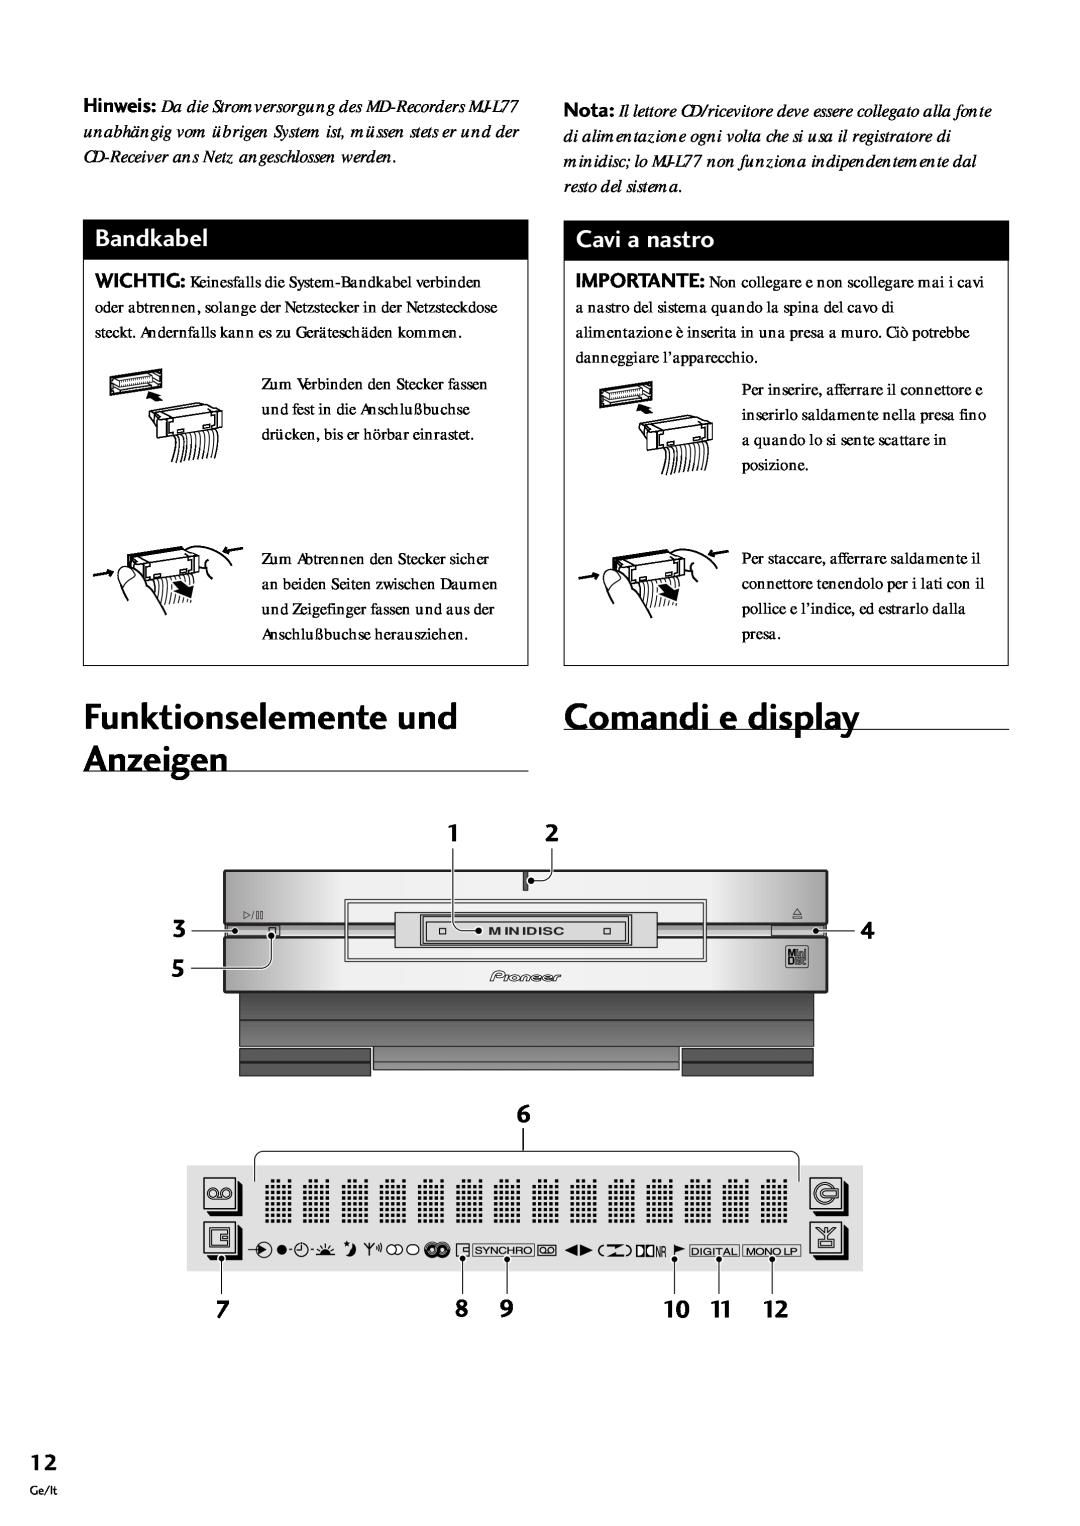 Pioneer MJ-L77 operating instructions Funktionselemente und, Comandi e display, Anzeigen, Bandkabel, Cavi a nastro 